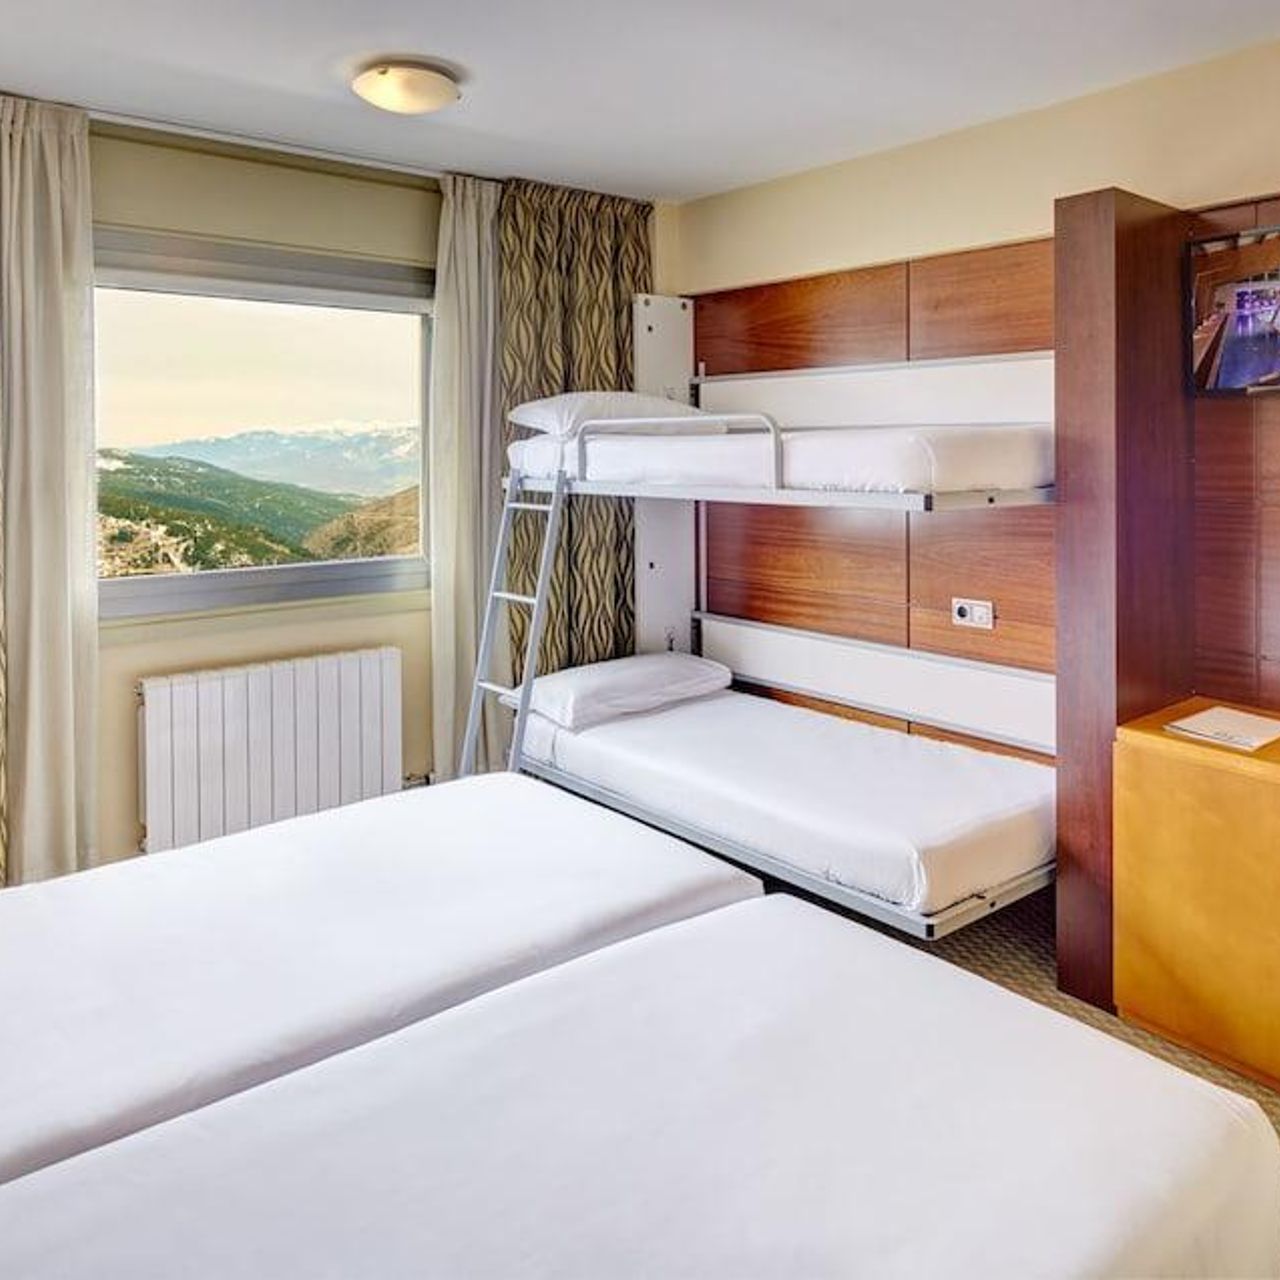 Sercotel Hotel & Spa La Collada en Toses - HOTEL INFO